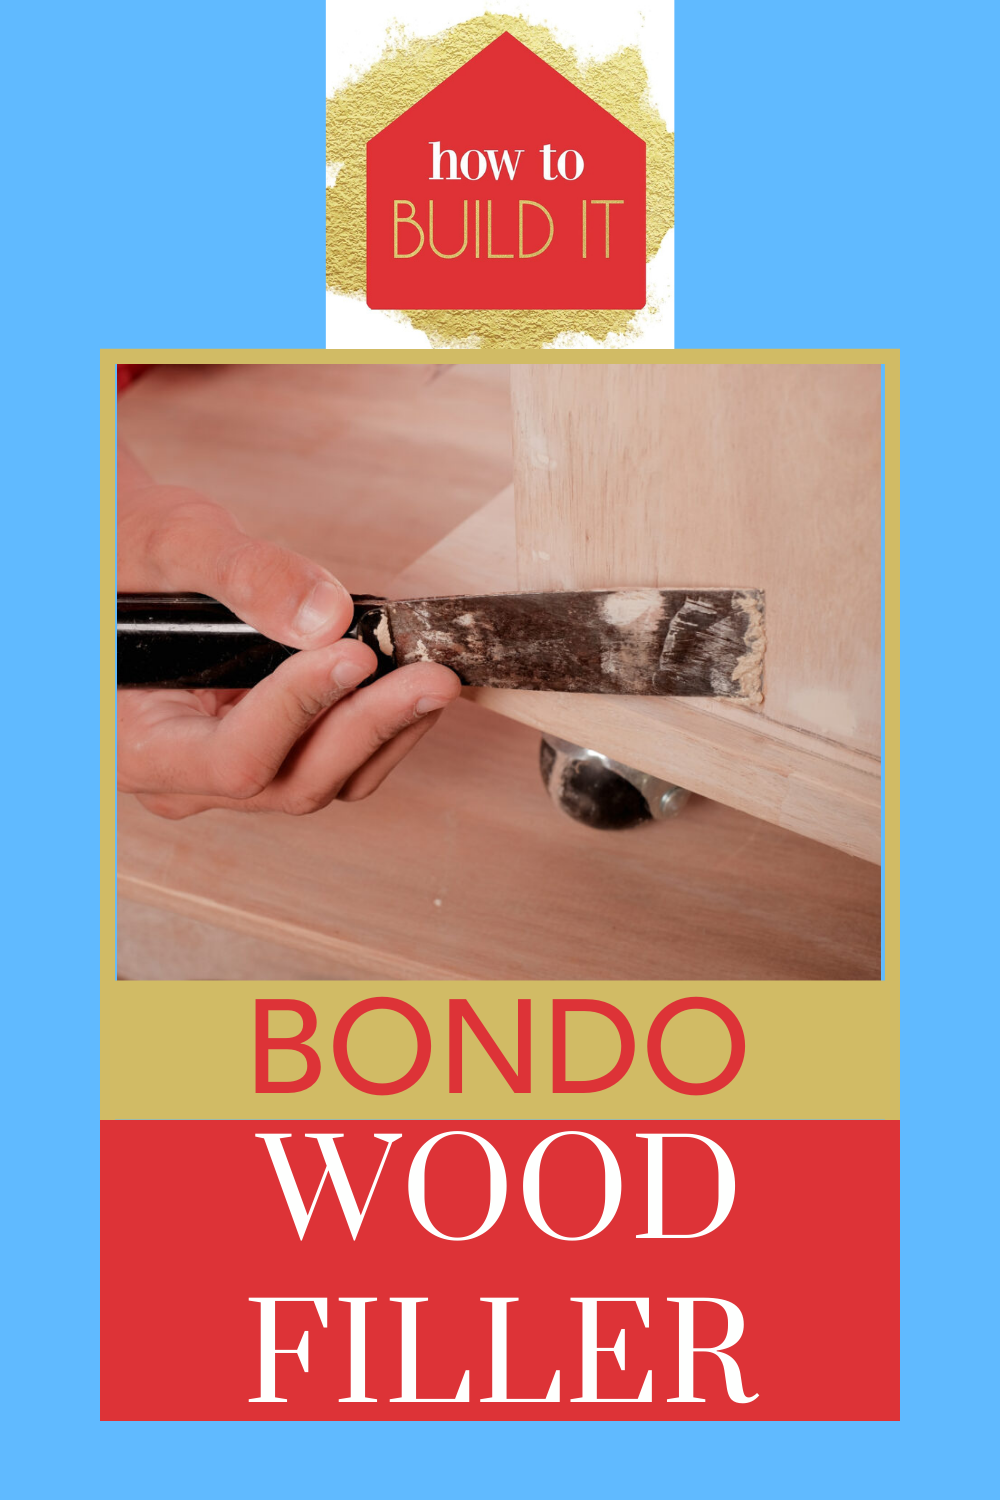 Bondo Wood Filler